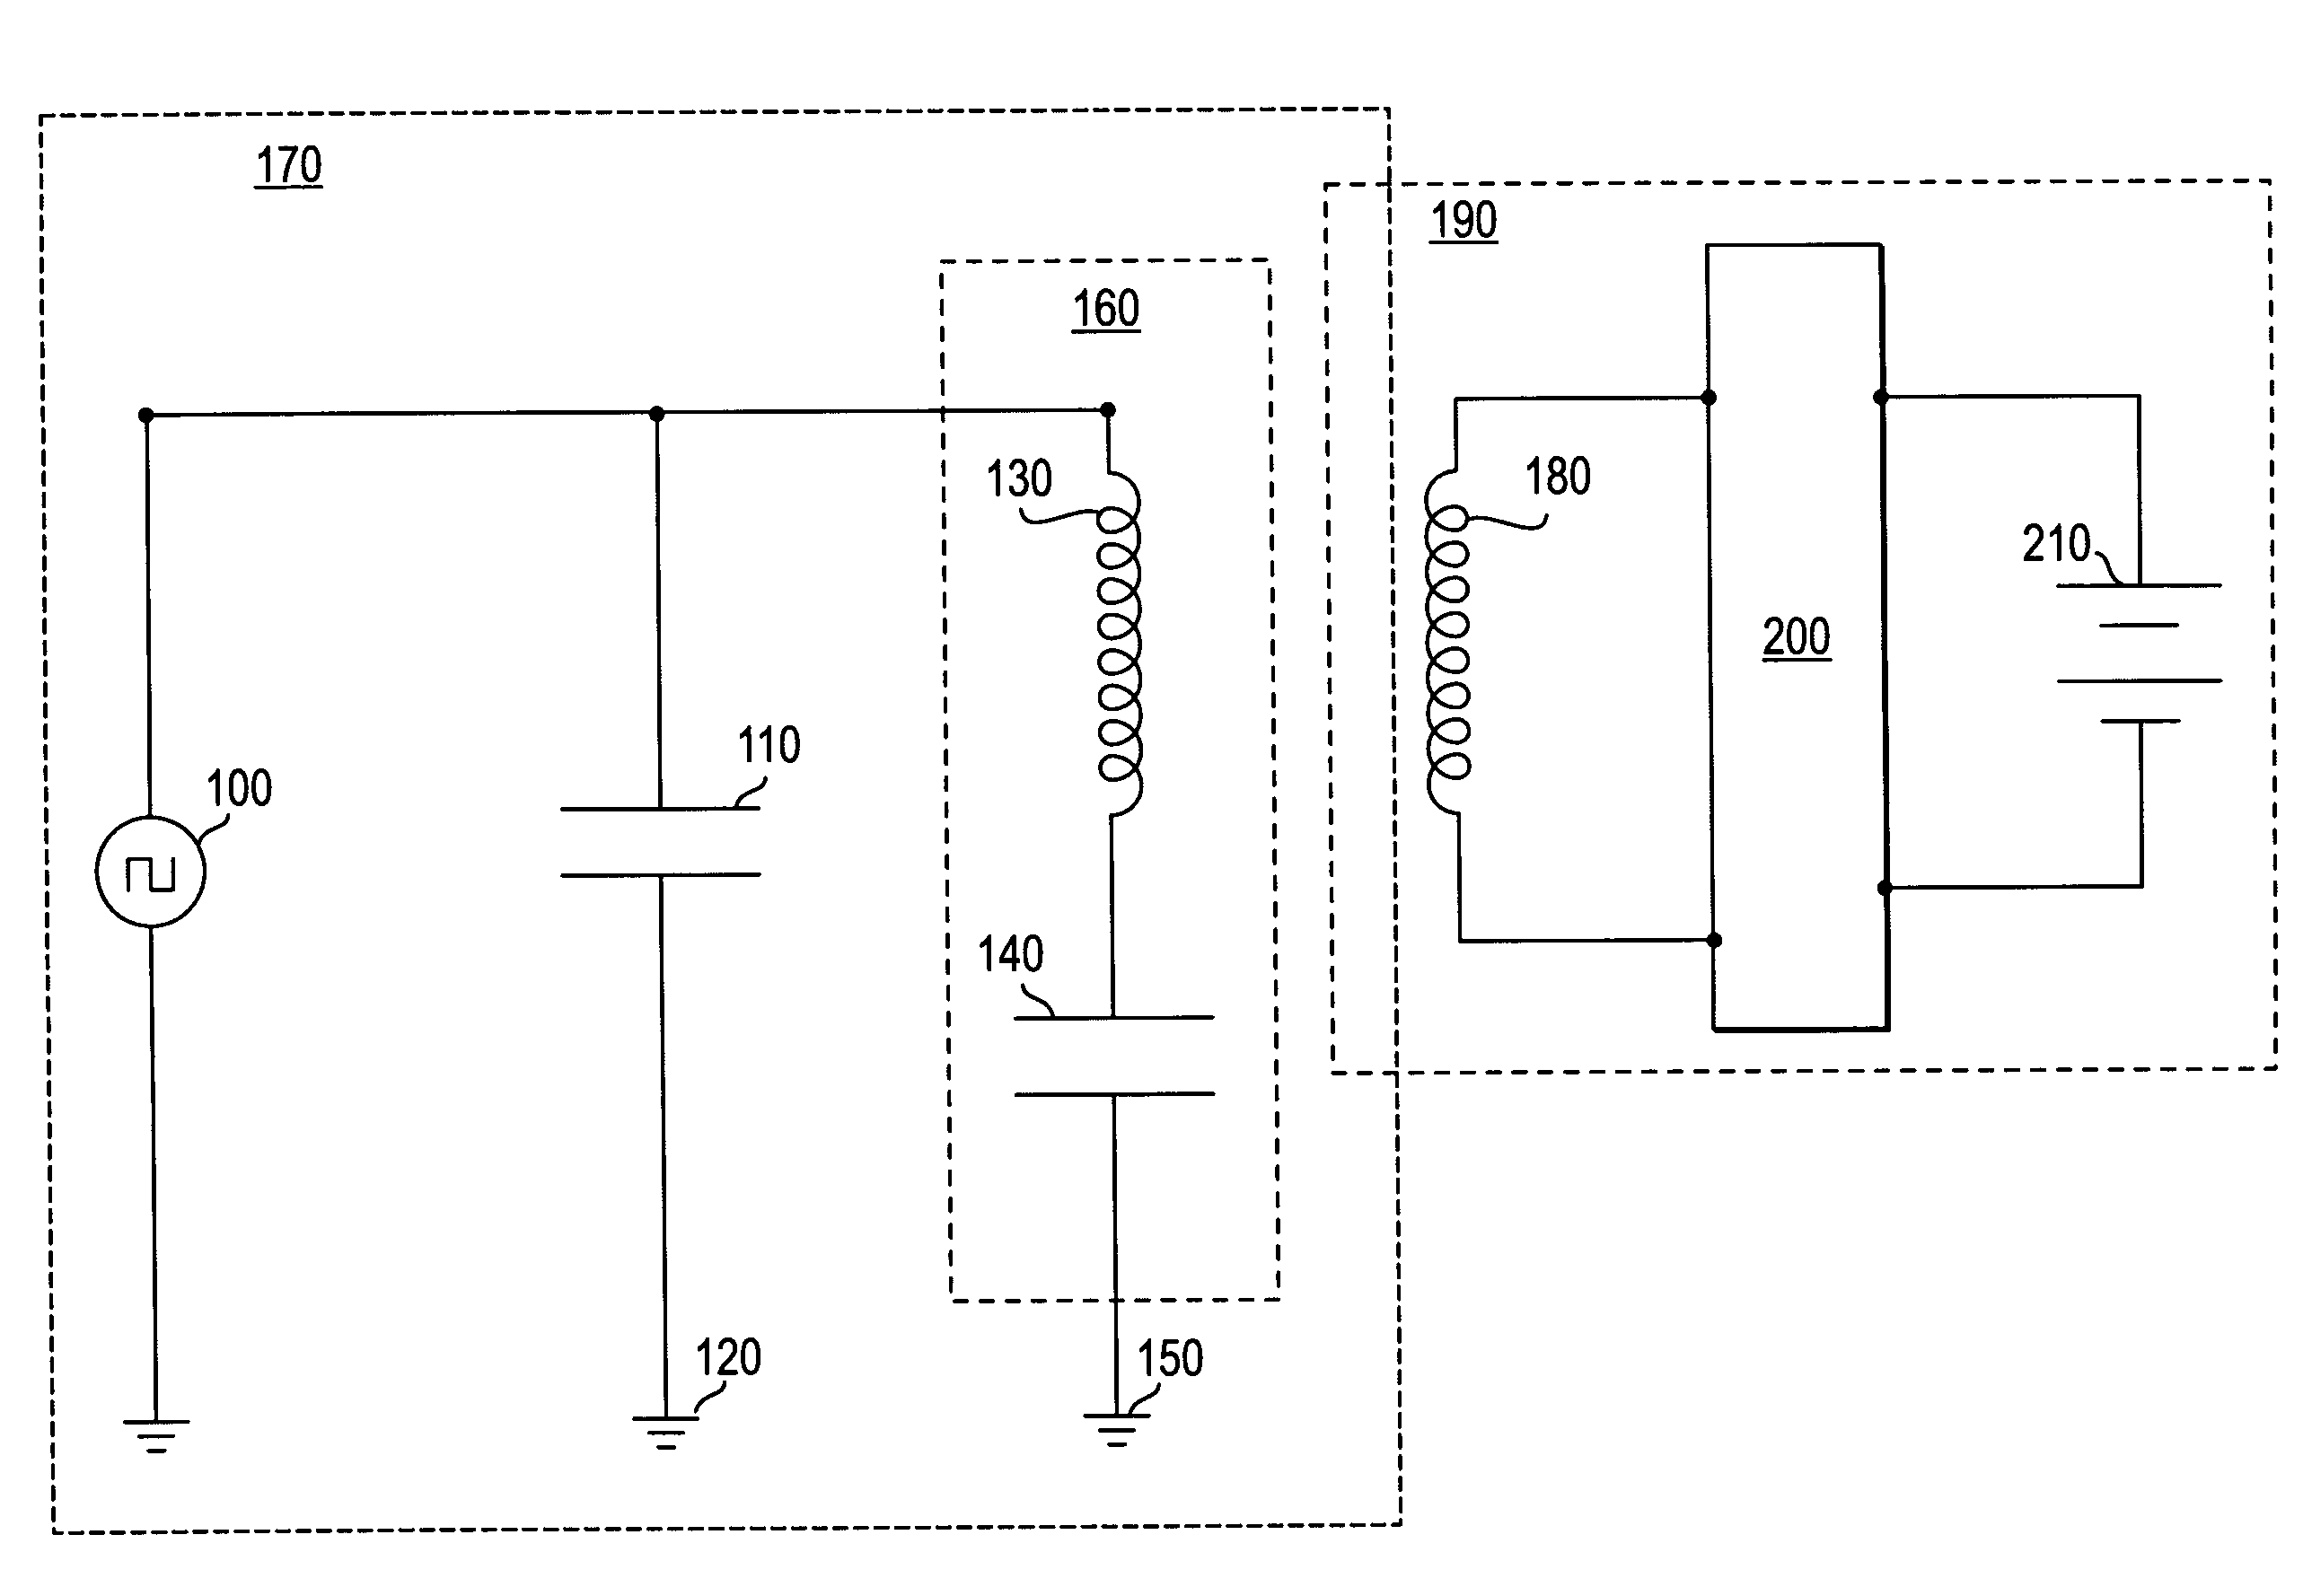 Series resonant inductive charging circuit